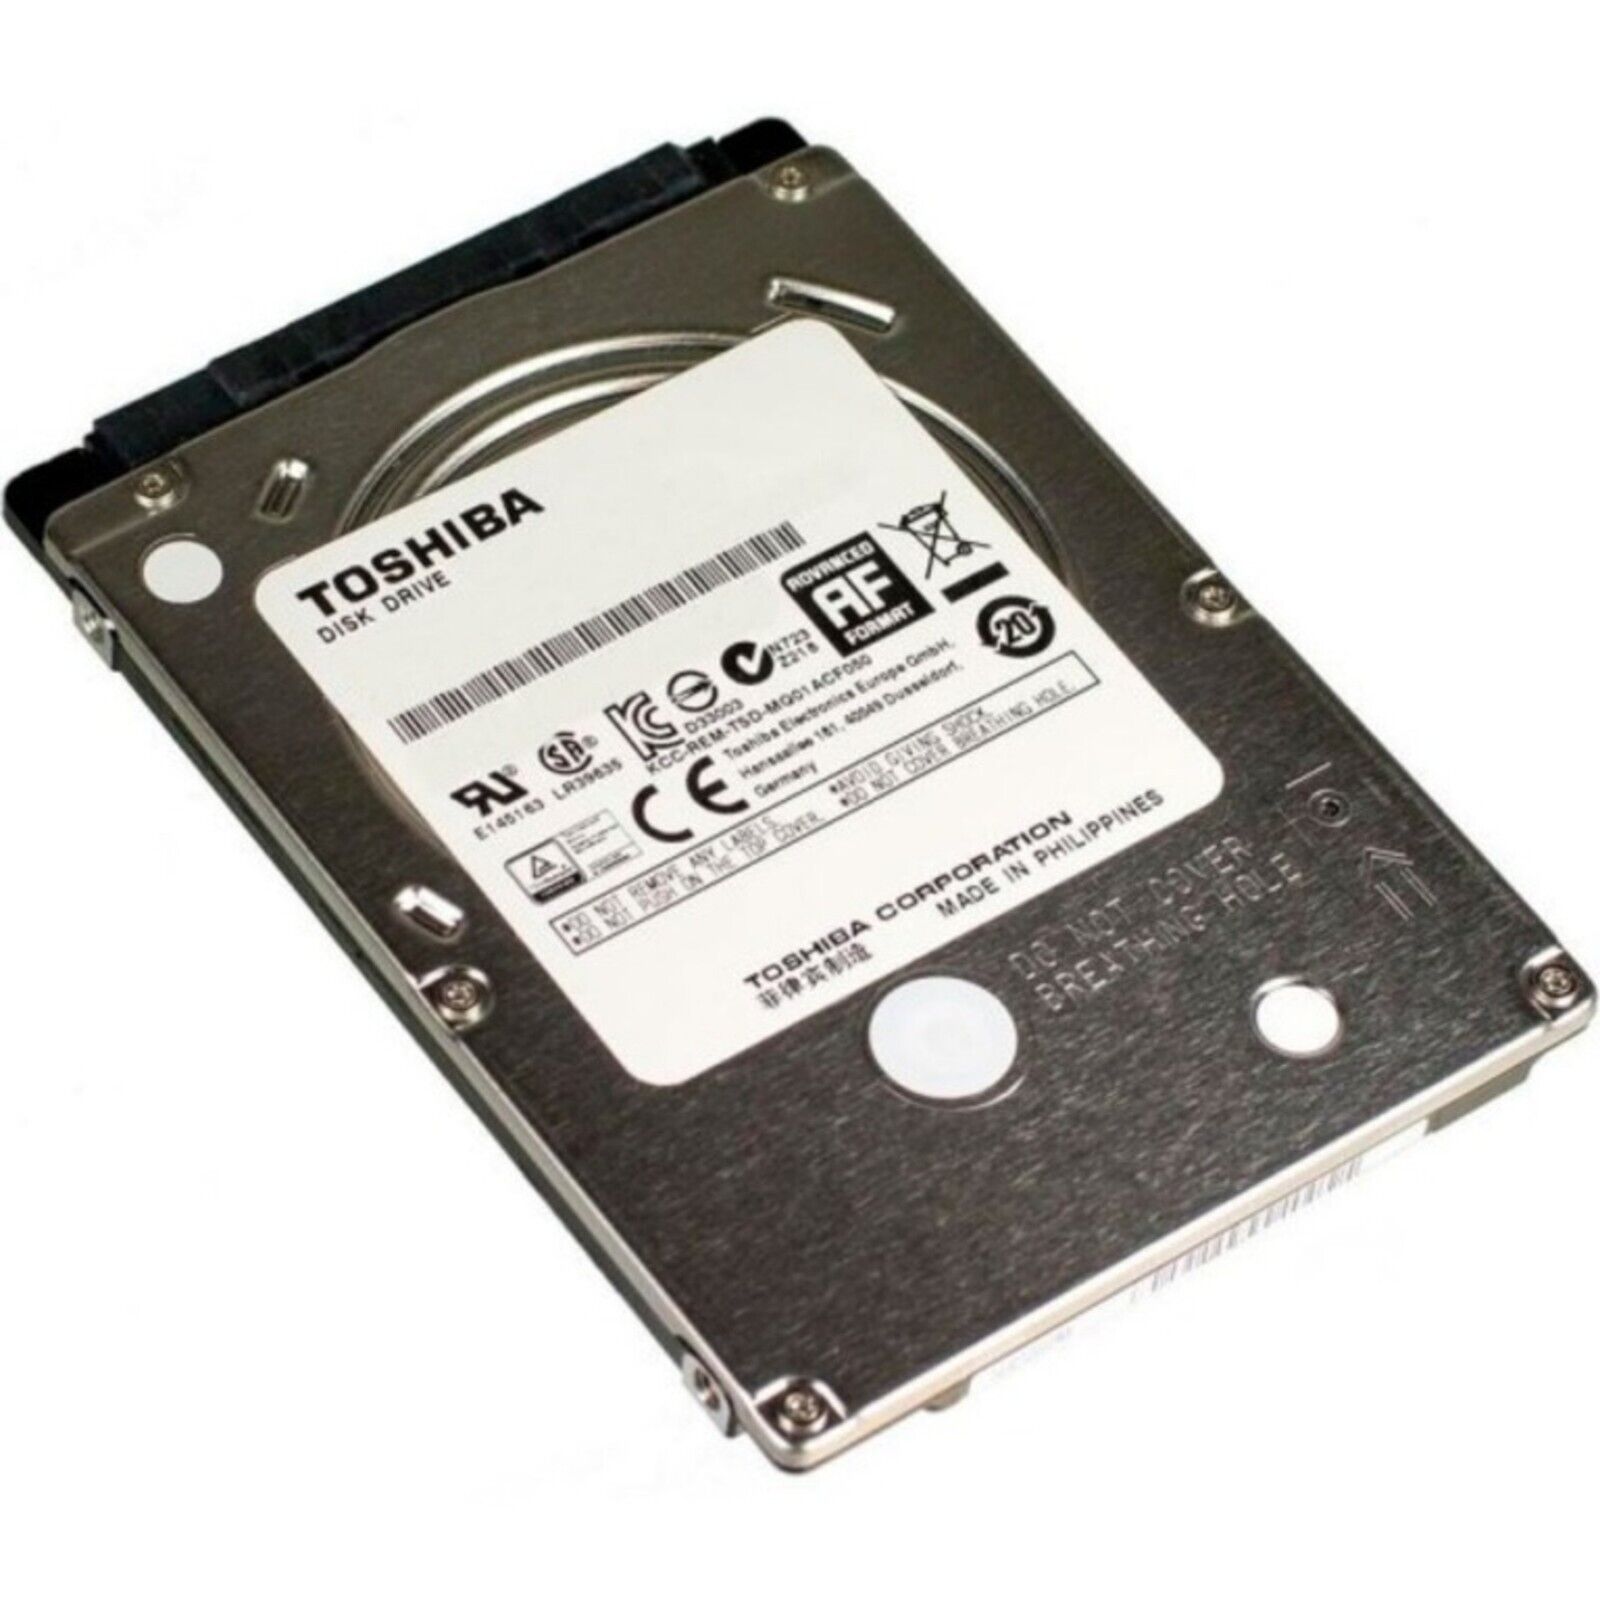 320 GB Sata-Ii Toshiba Internal HDD 5400rpm 2.5 